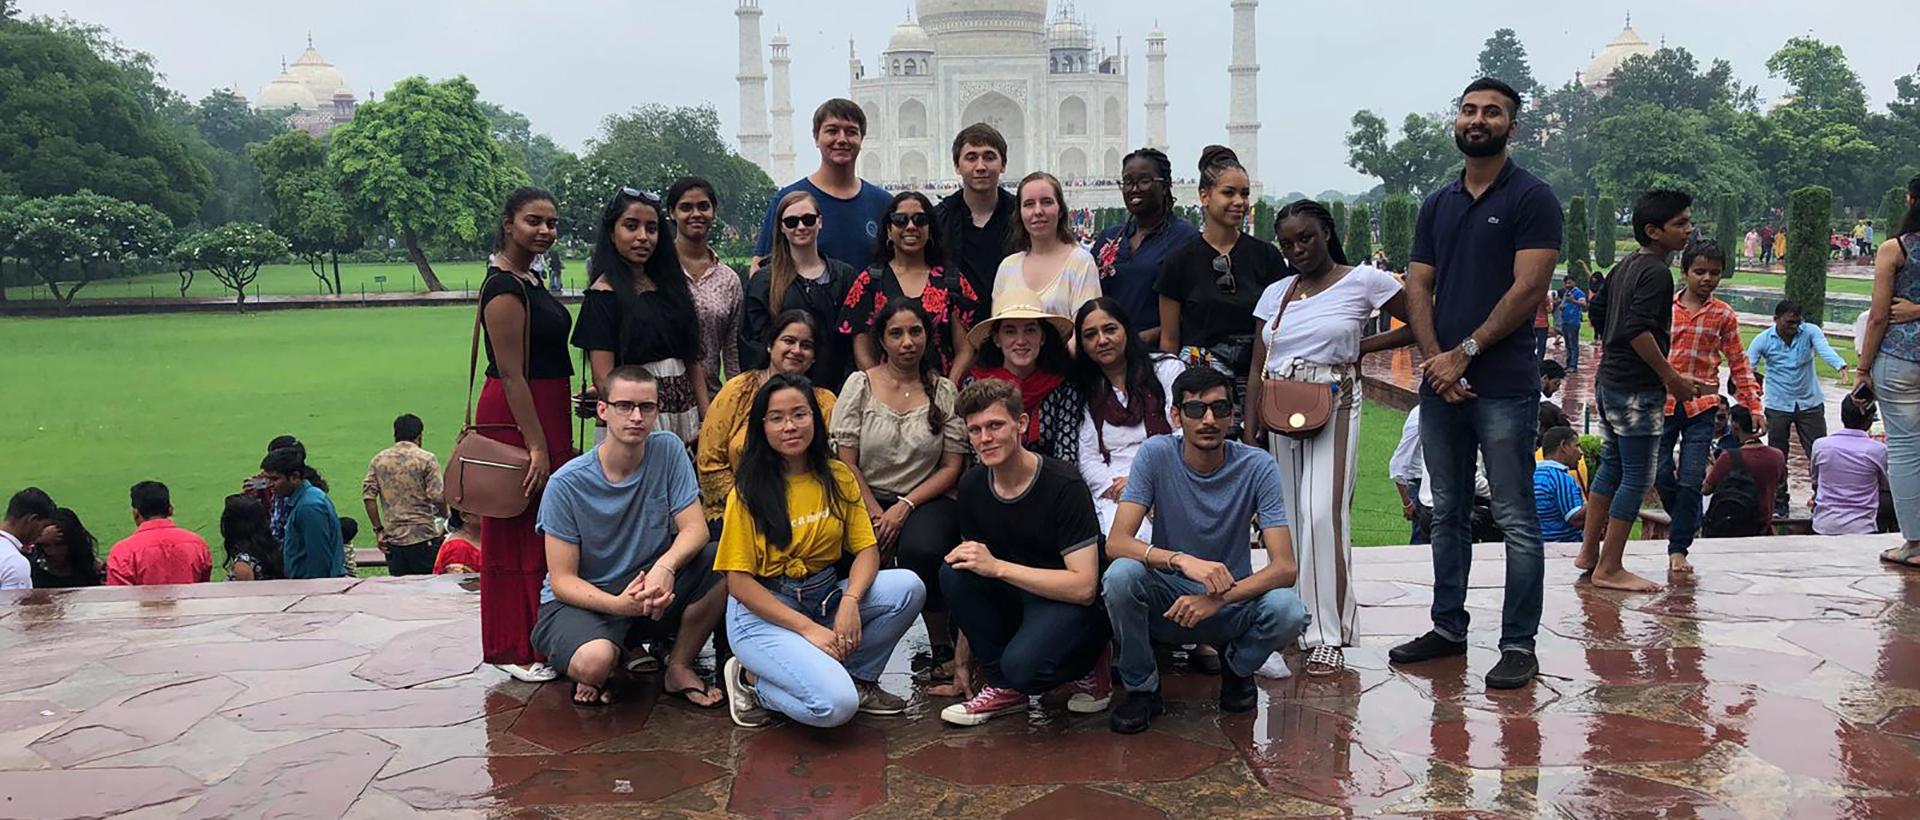 Enactus students outside the Taj Mahal